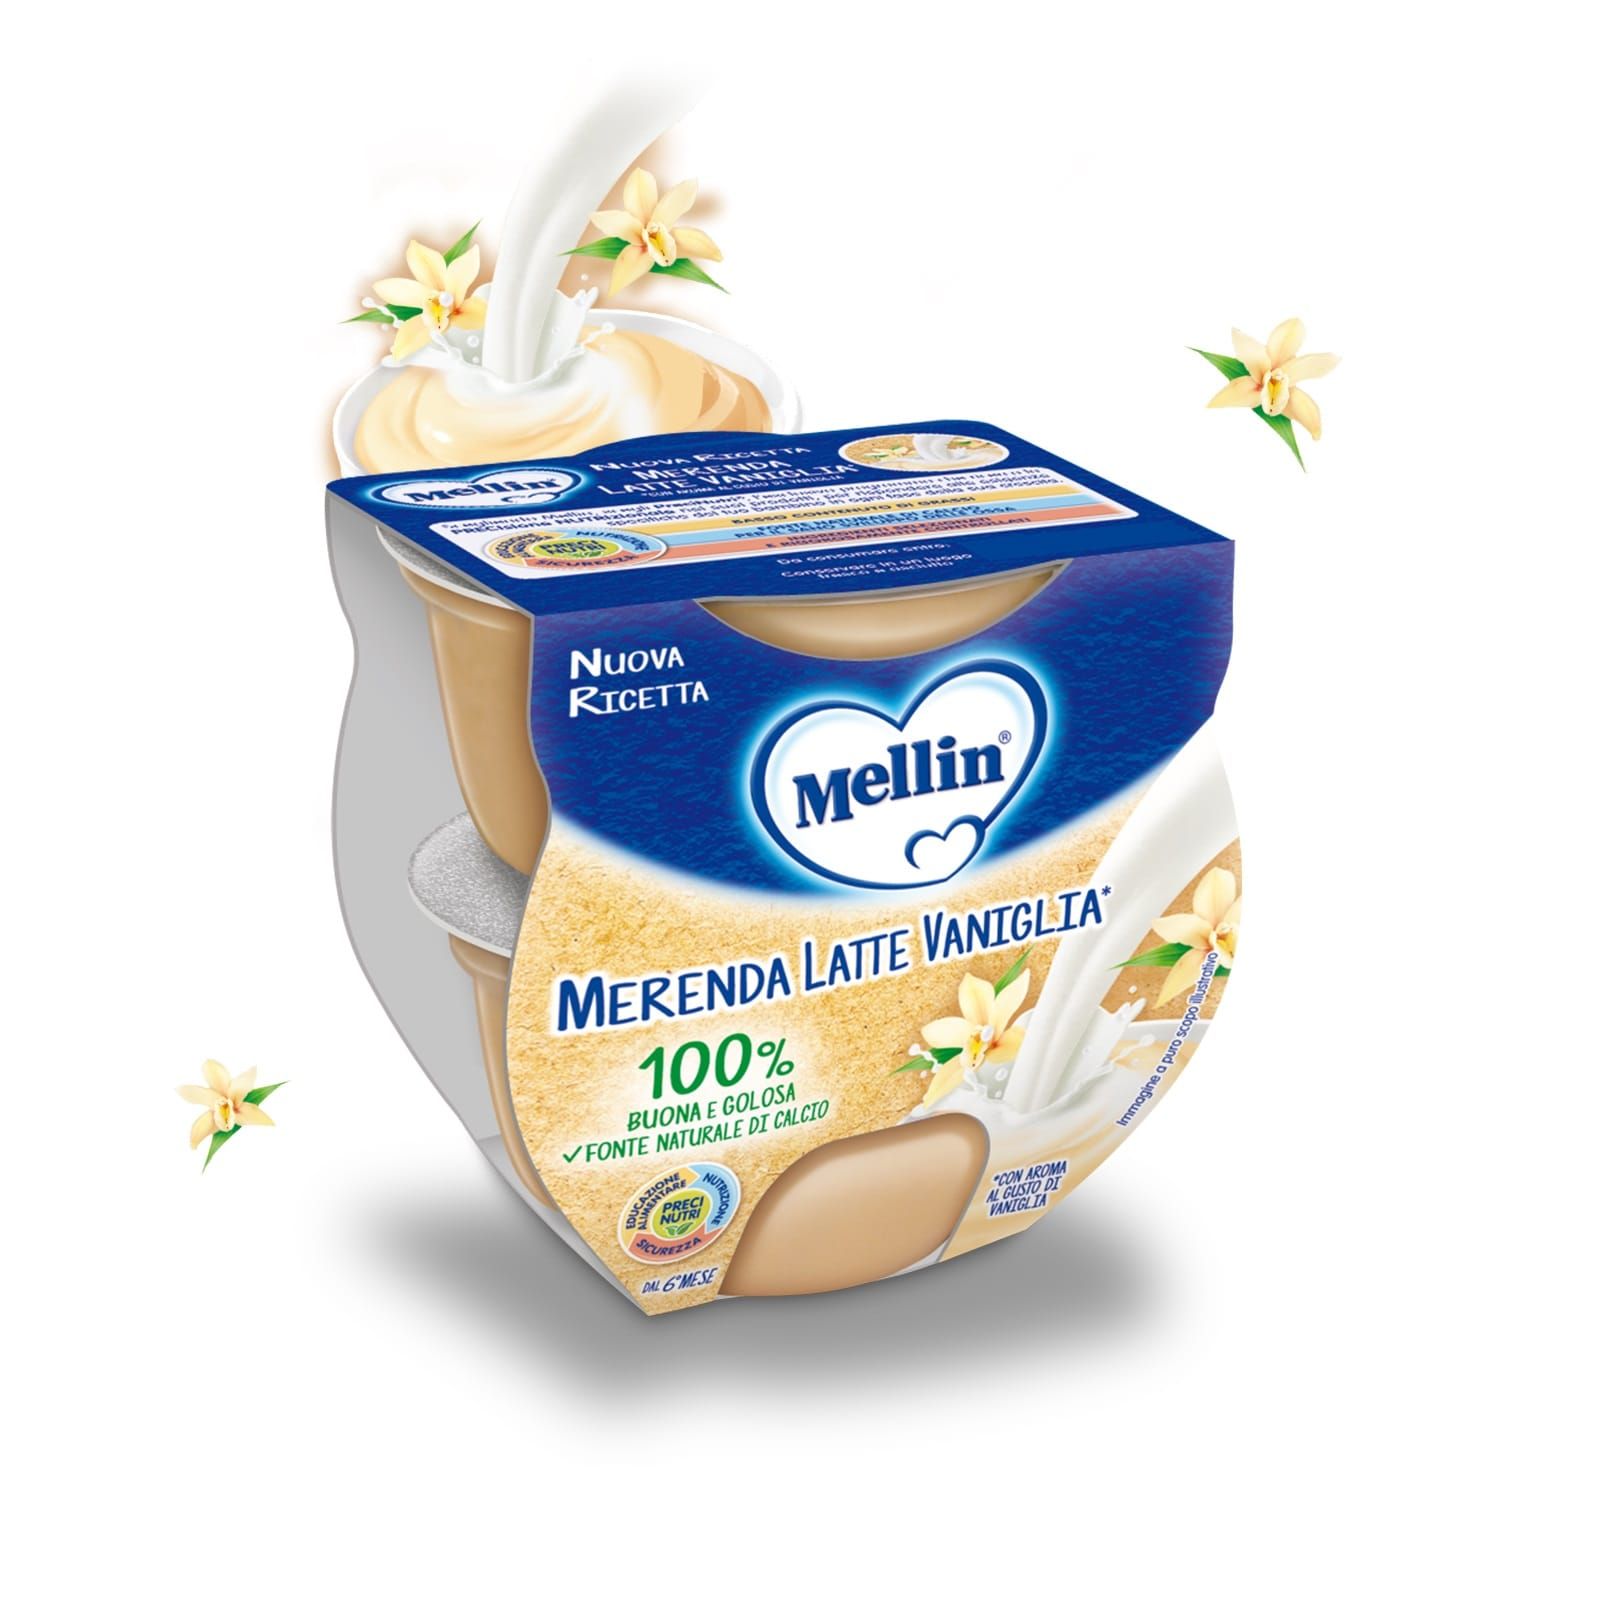 Mellin merenda latte vaniglia 2 x 100 g | Farmacia Online